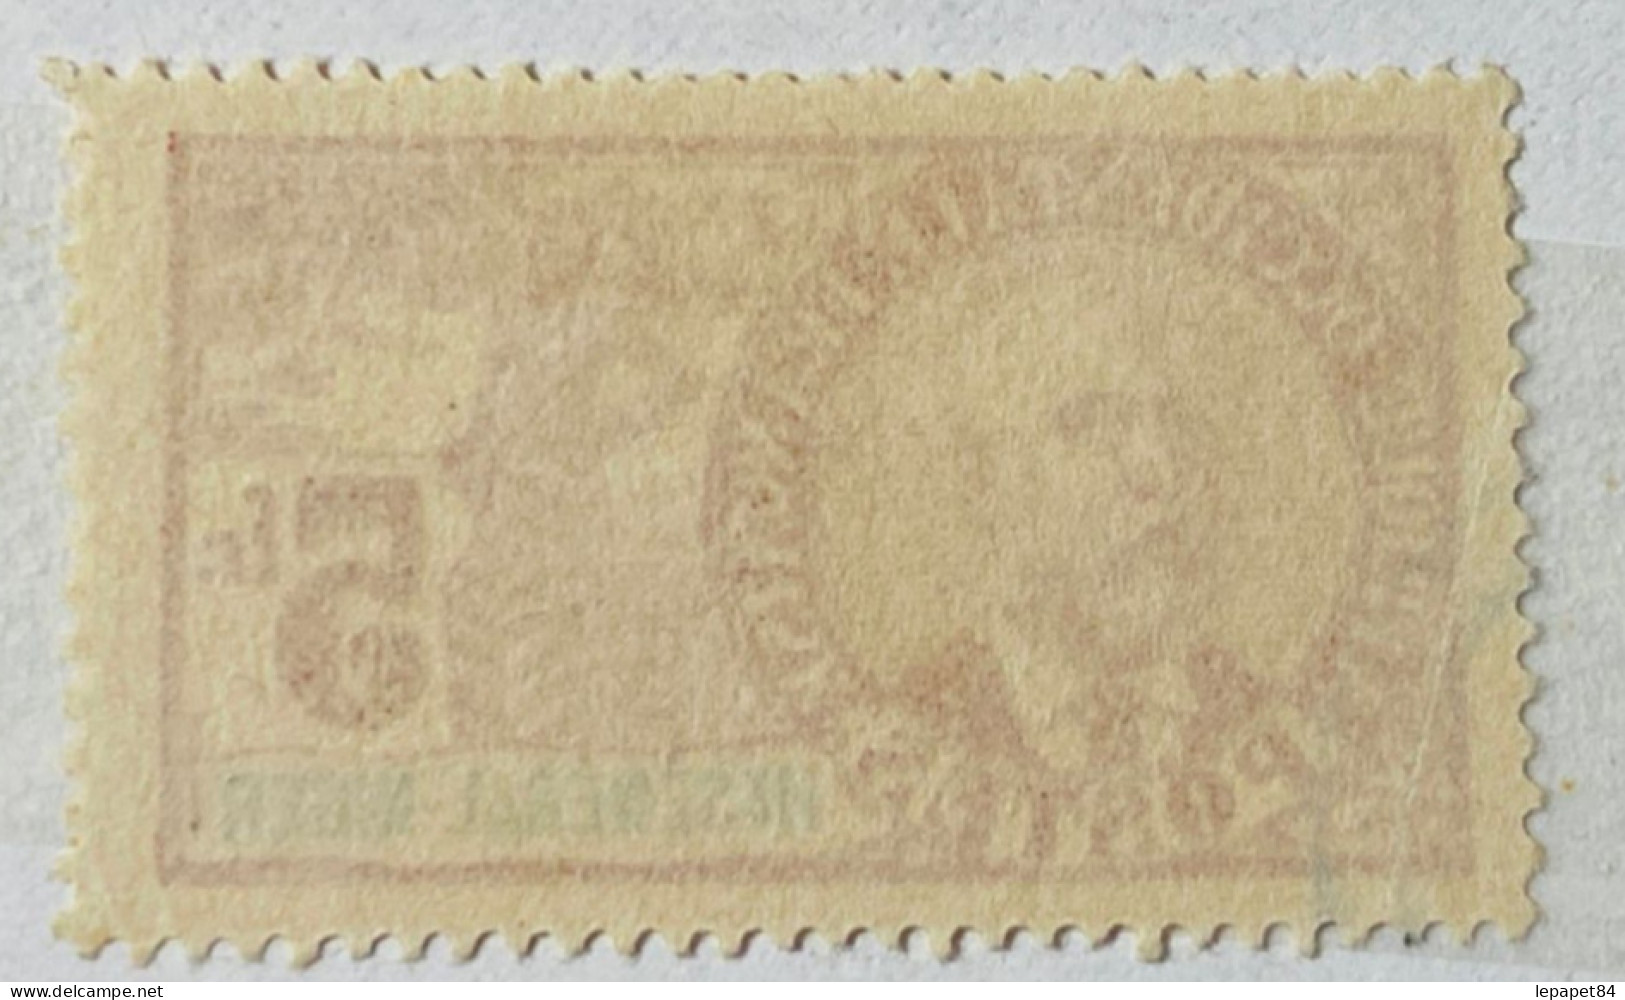 Ht Sénégal Et Niger YT N° 17 - Used Stamps